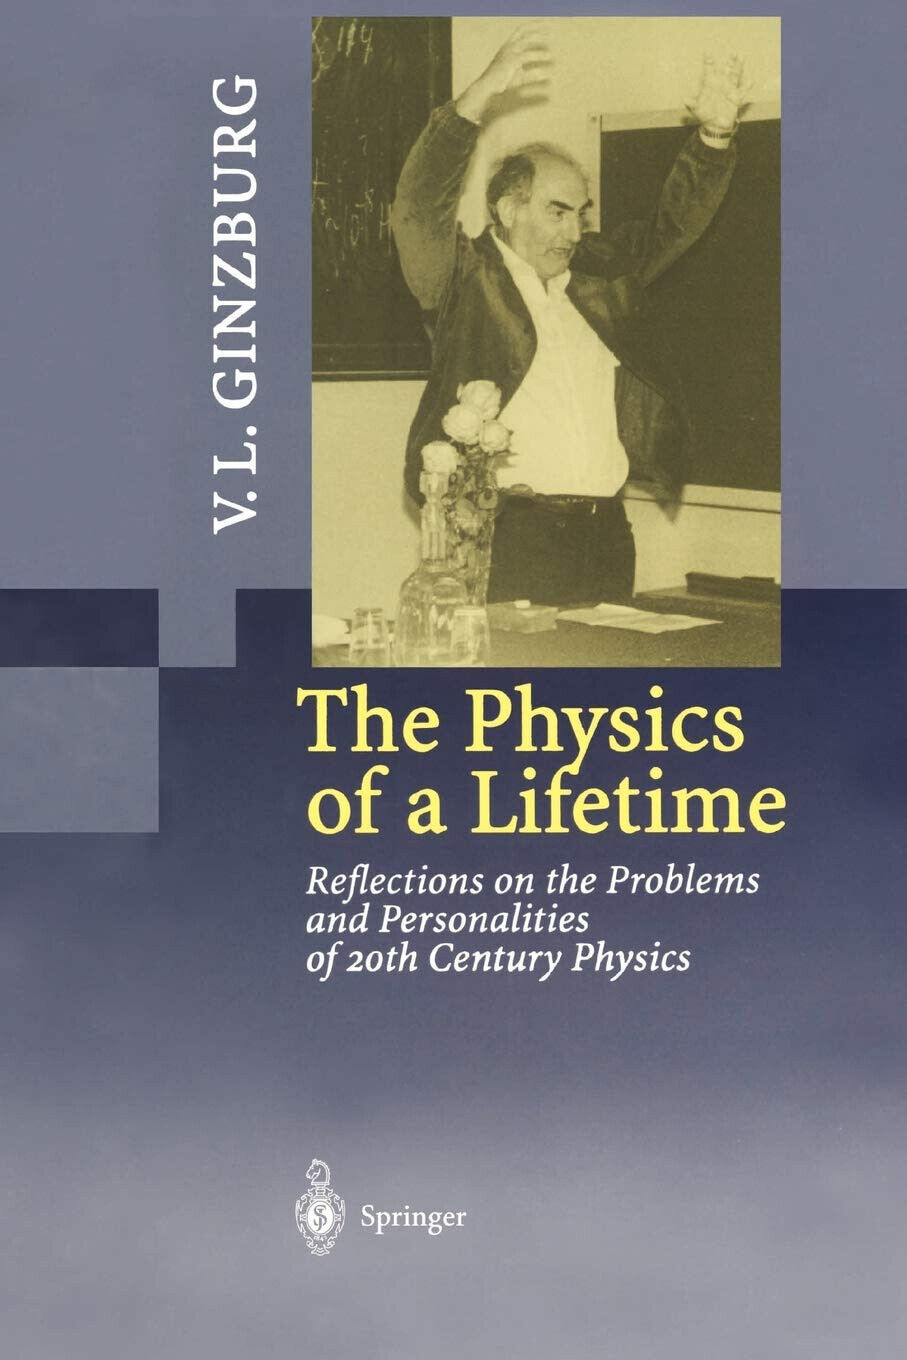 The Physics of a Lifetime - Vitaly L. Ginzburg - Springer, 2010 libro usato